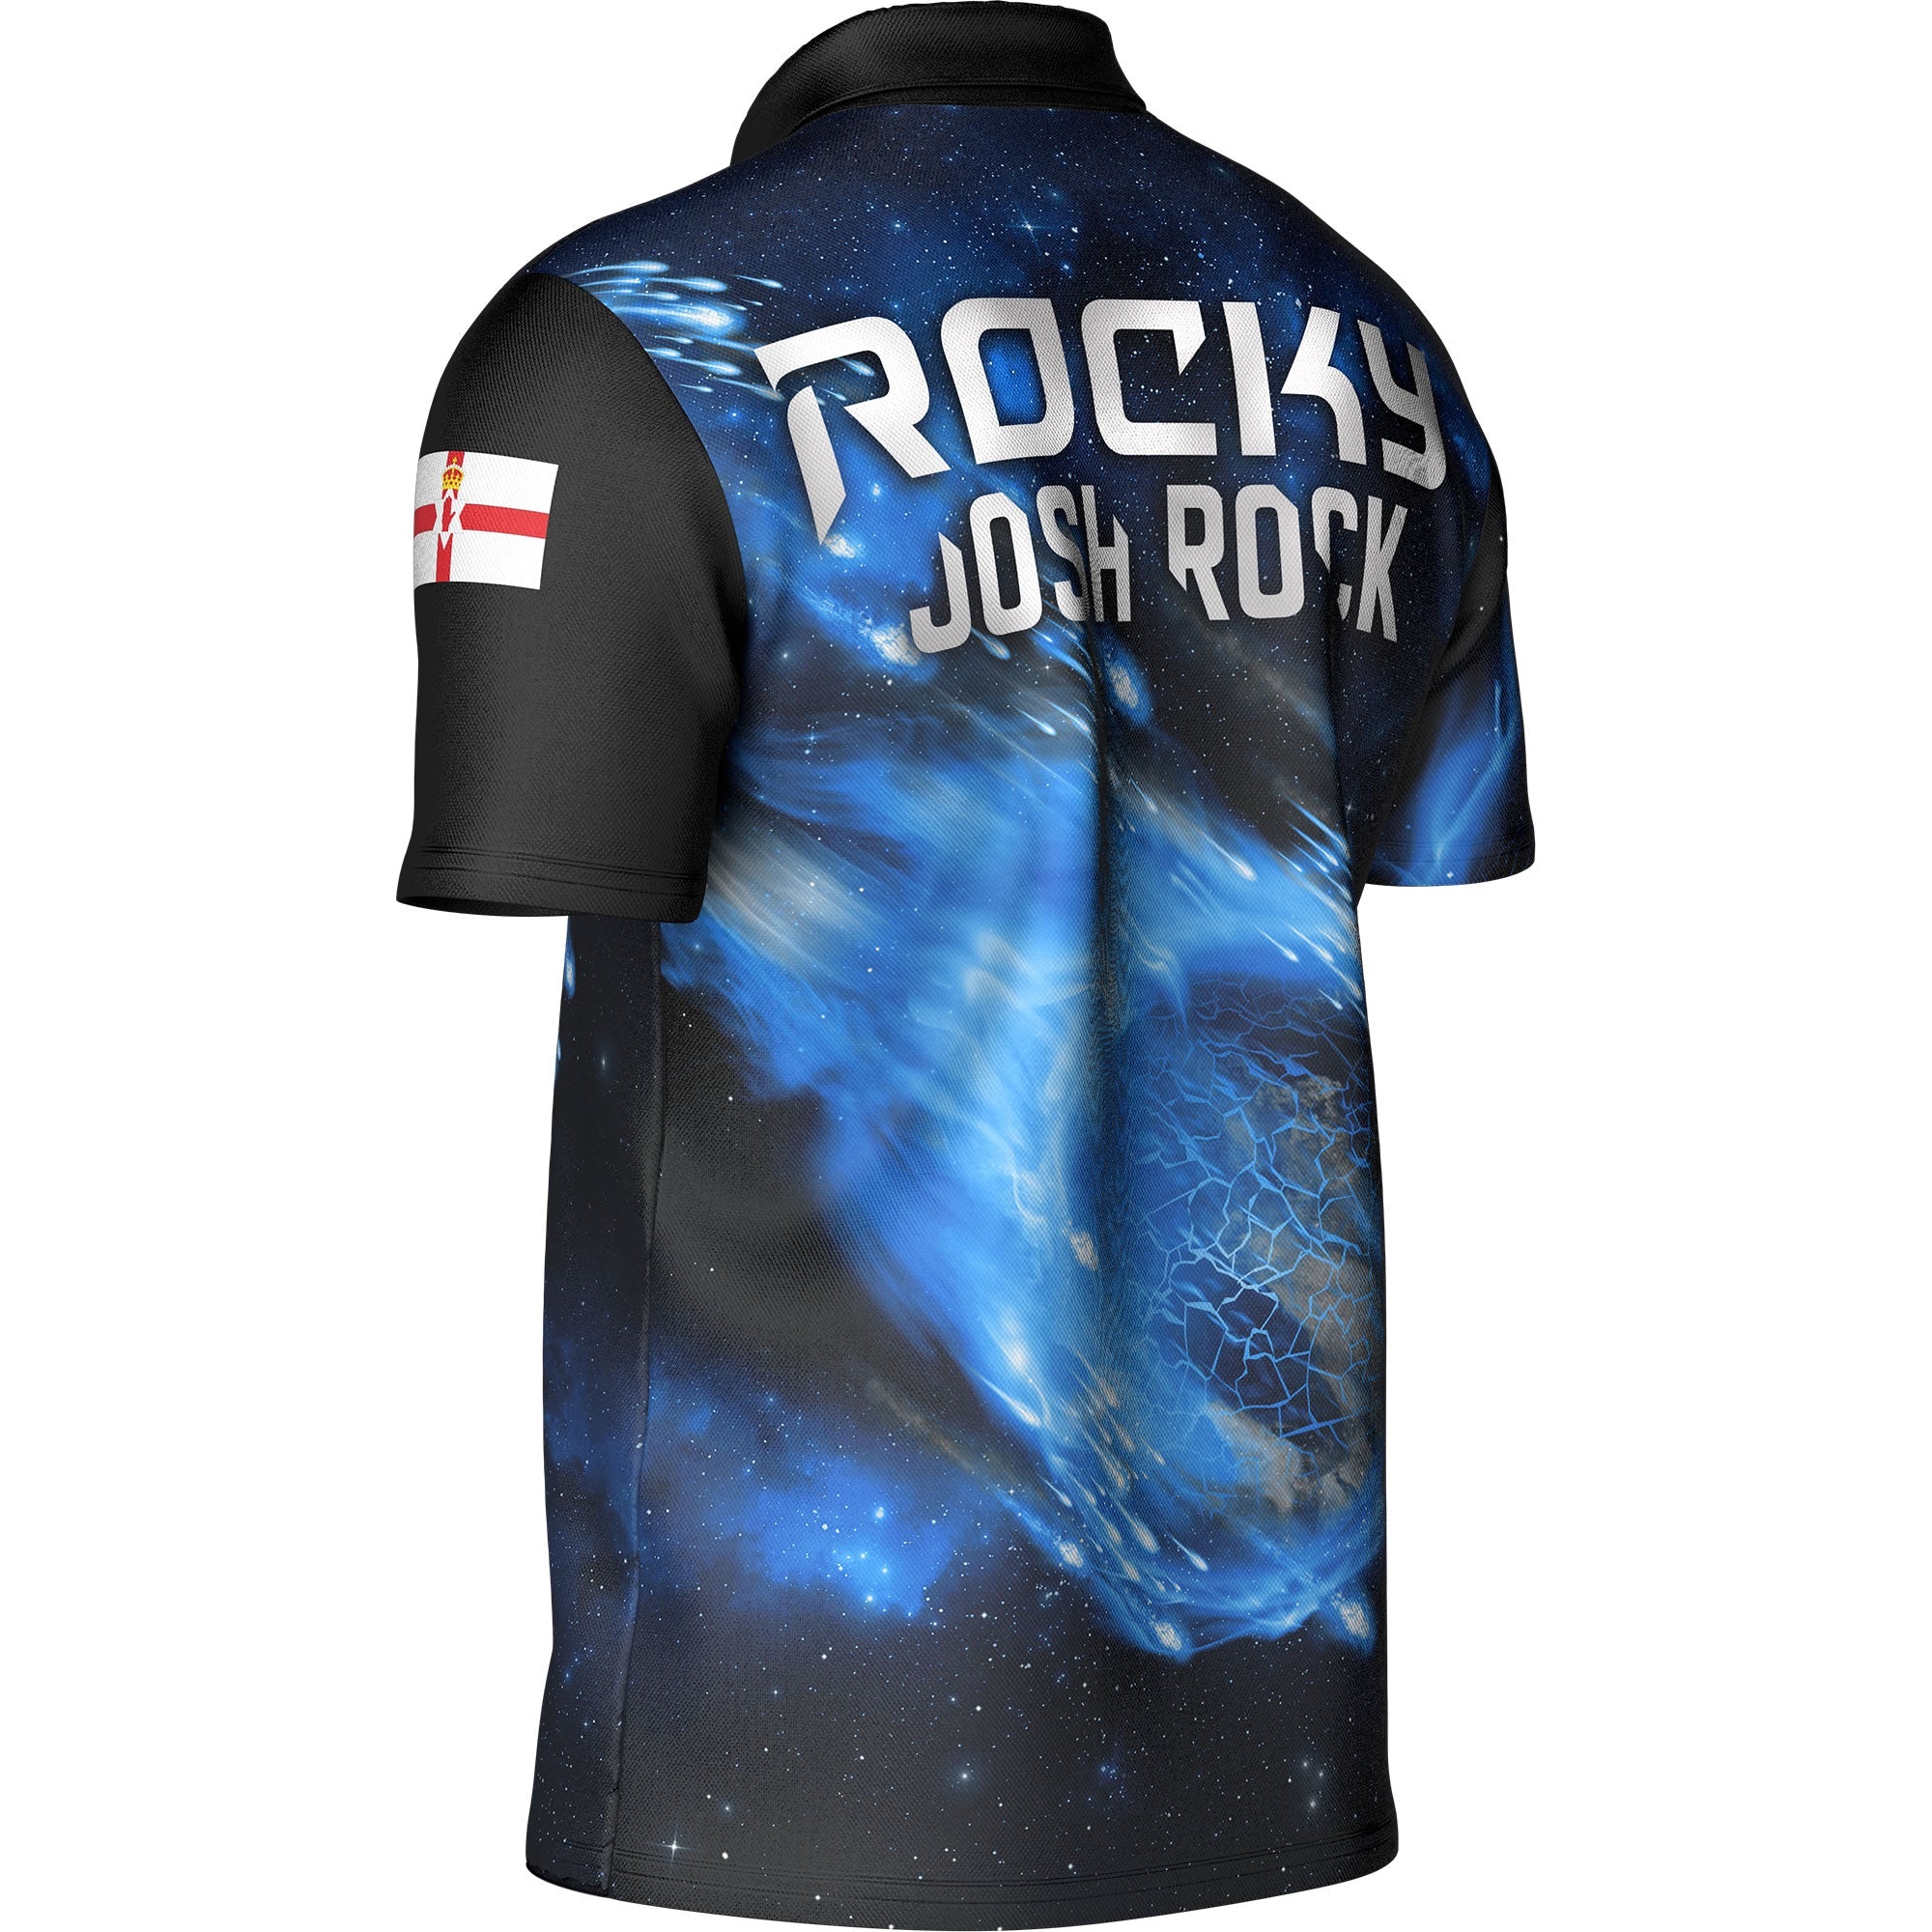 Mission Player Dart Shirt - Josh Rock - Rocky